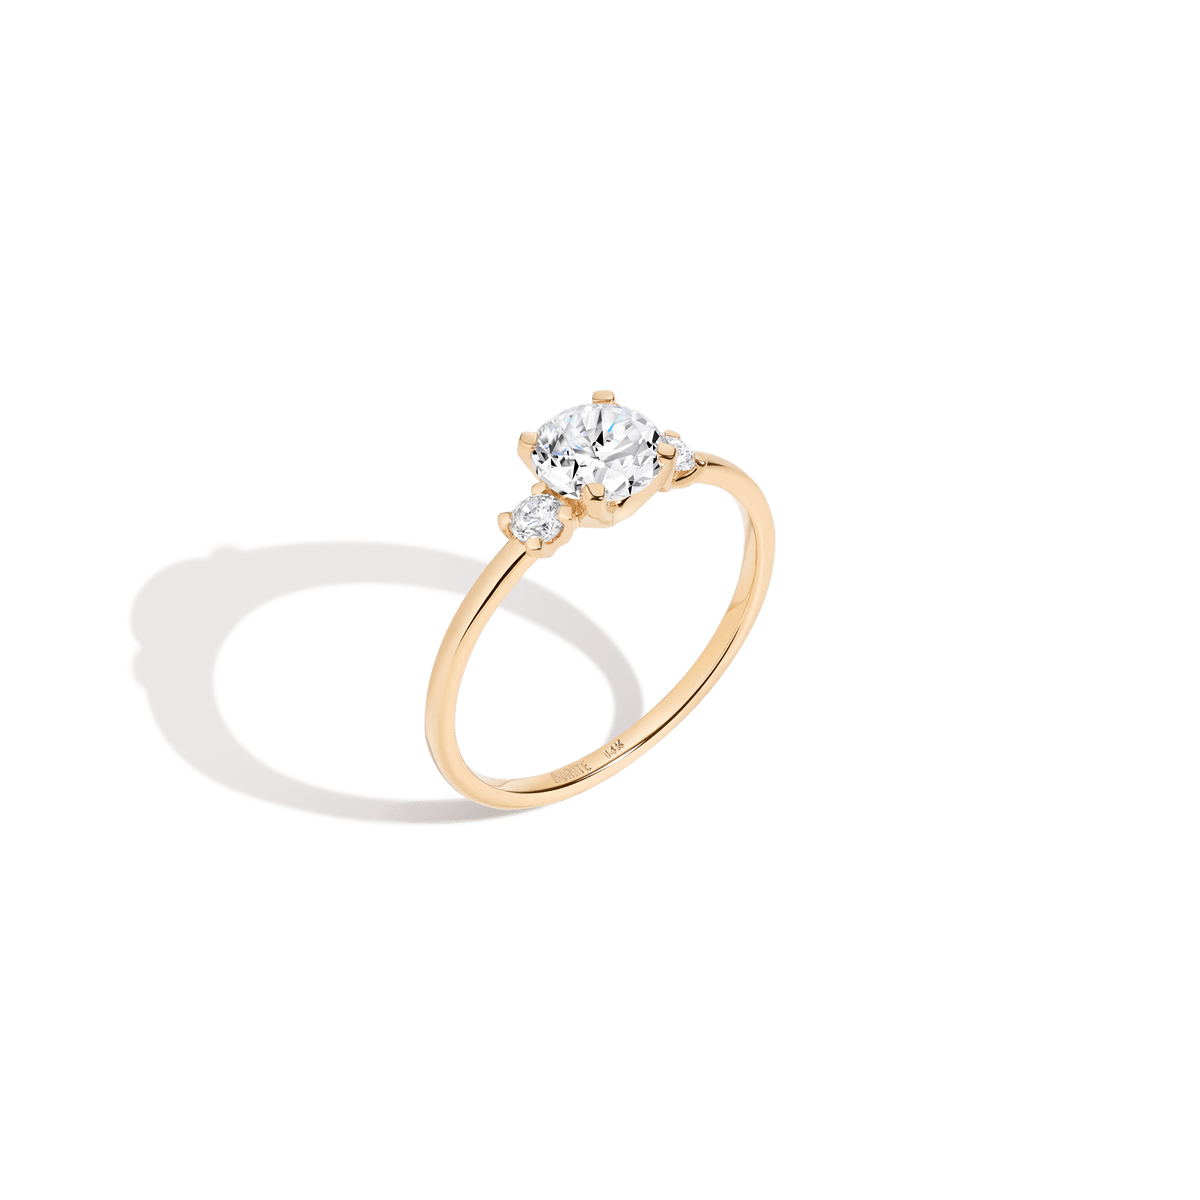 Solitaire ring with a 0.50 carat diamond in platinum - BAUNAT